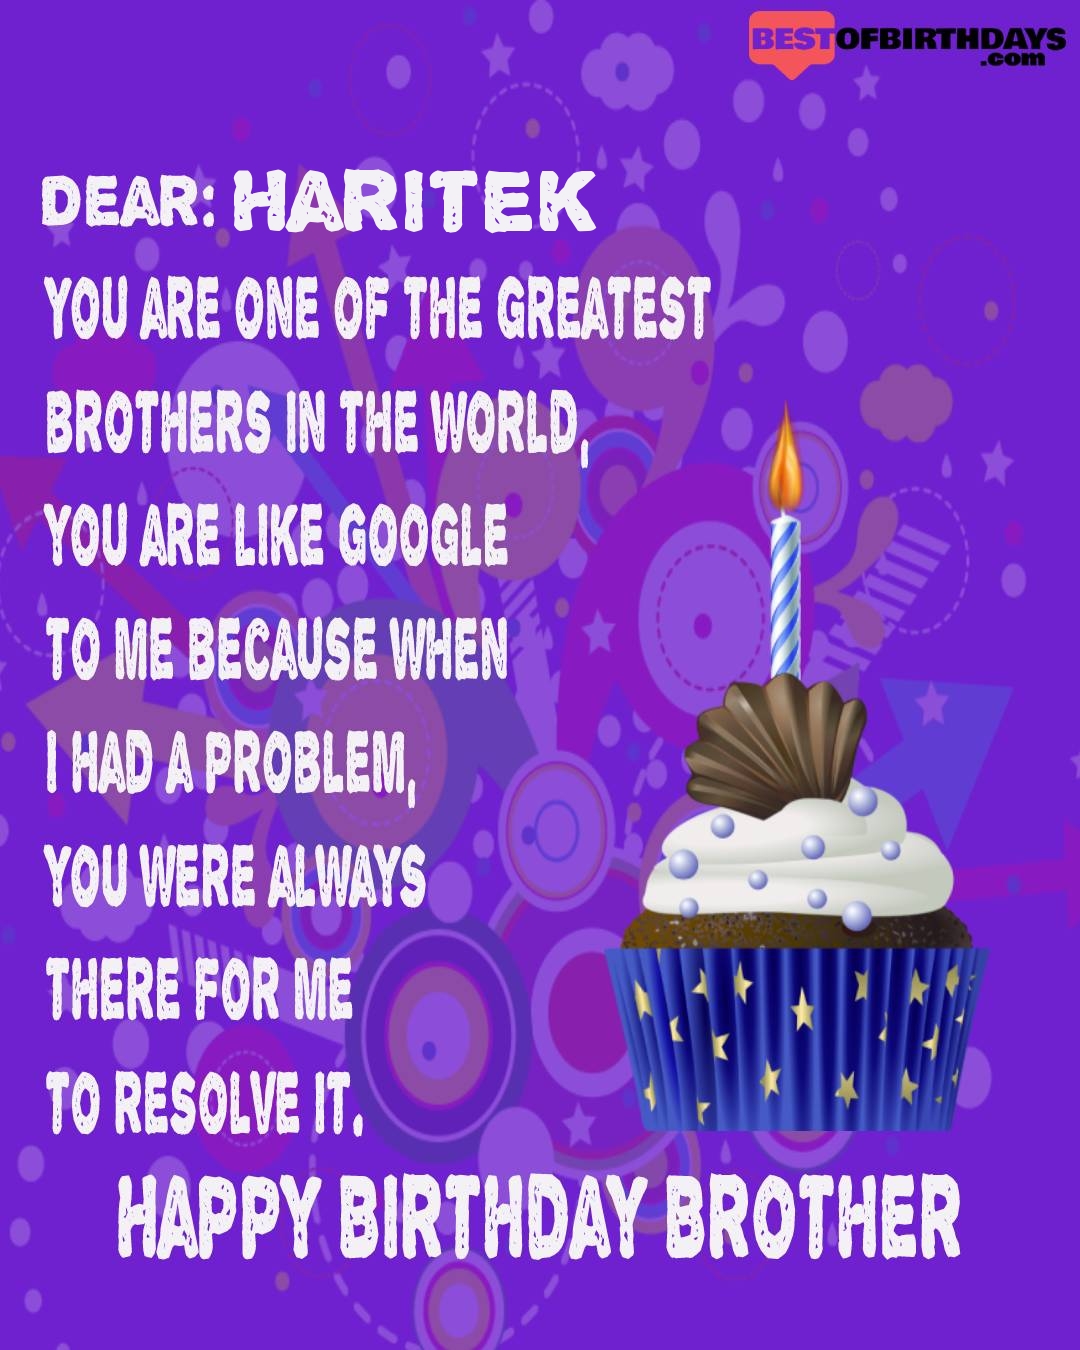 Happy birthday haritek bhai brother bro